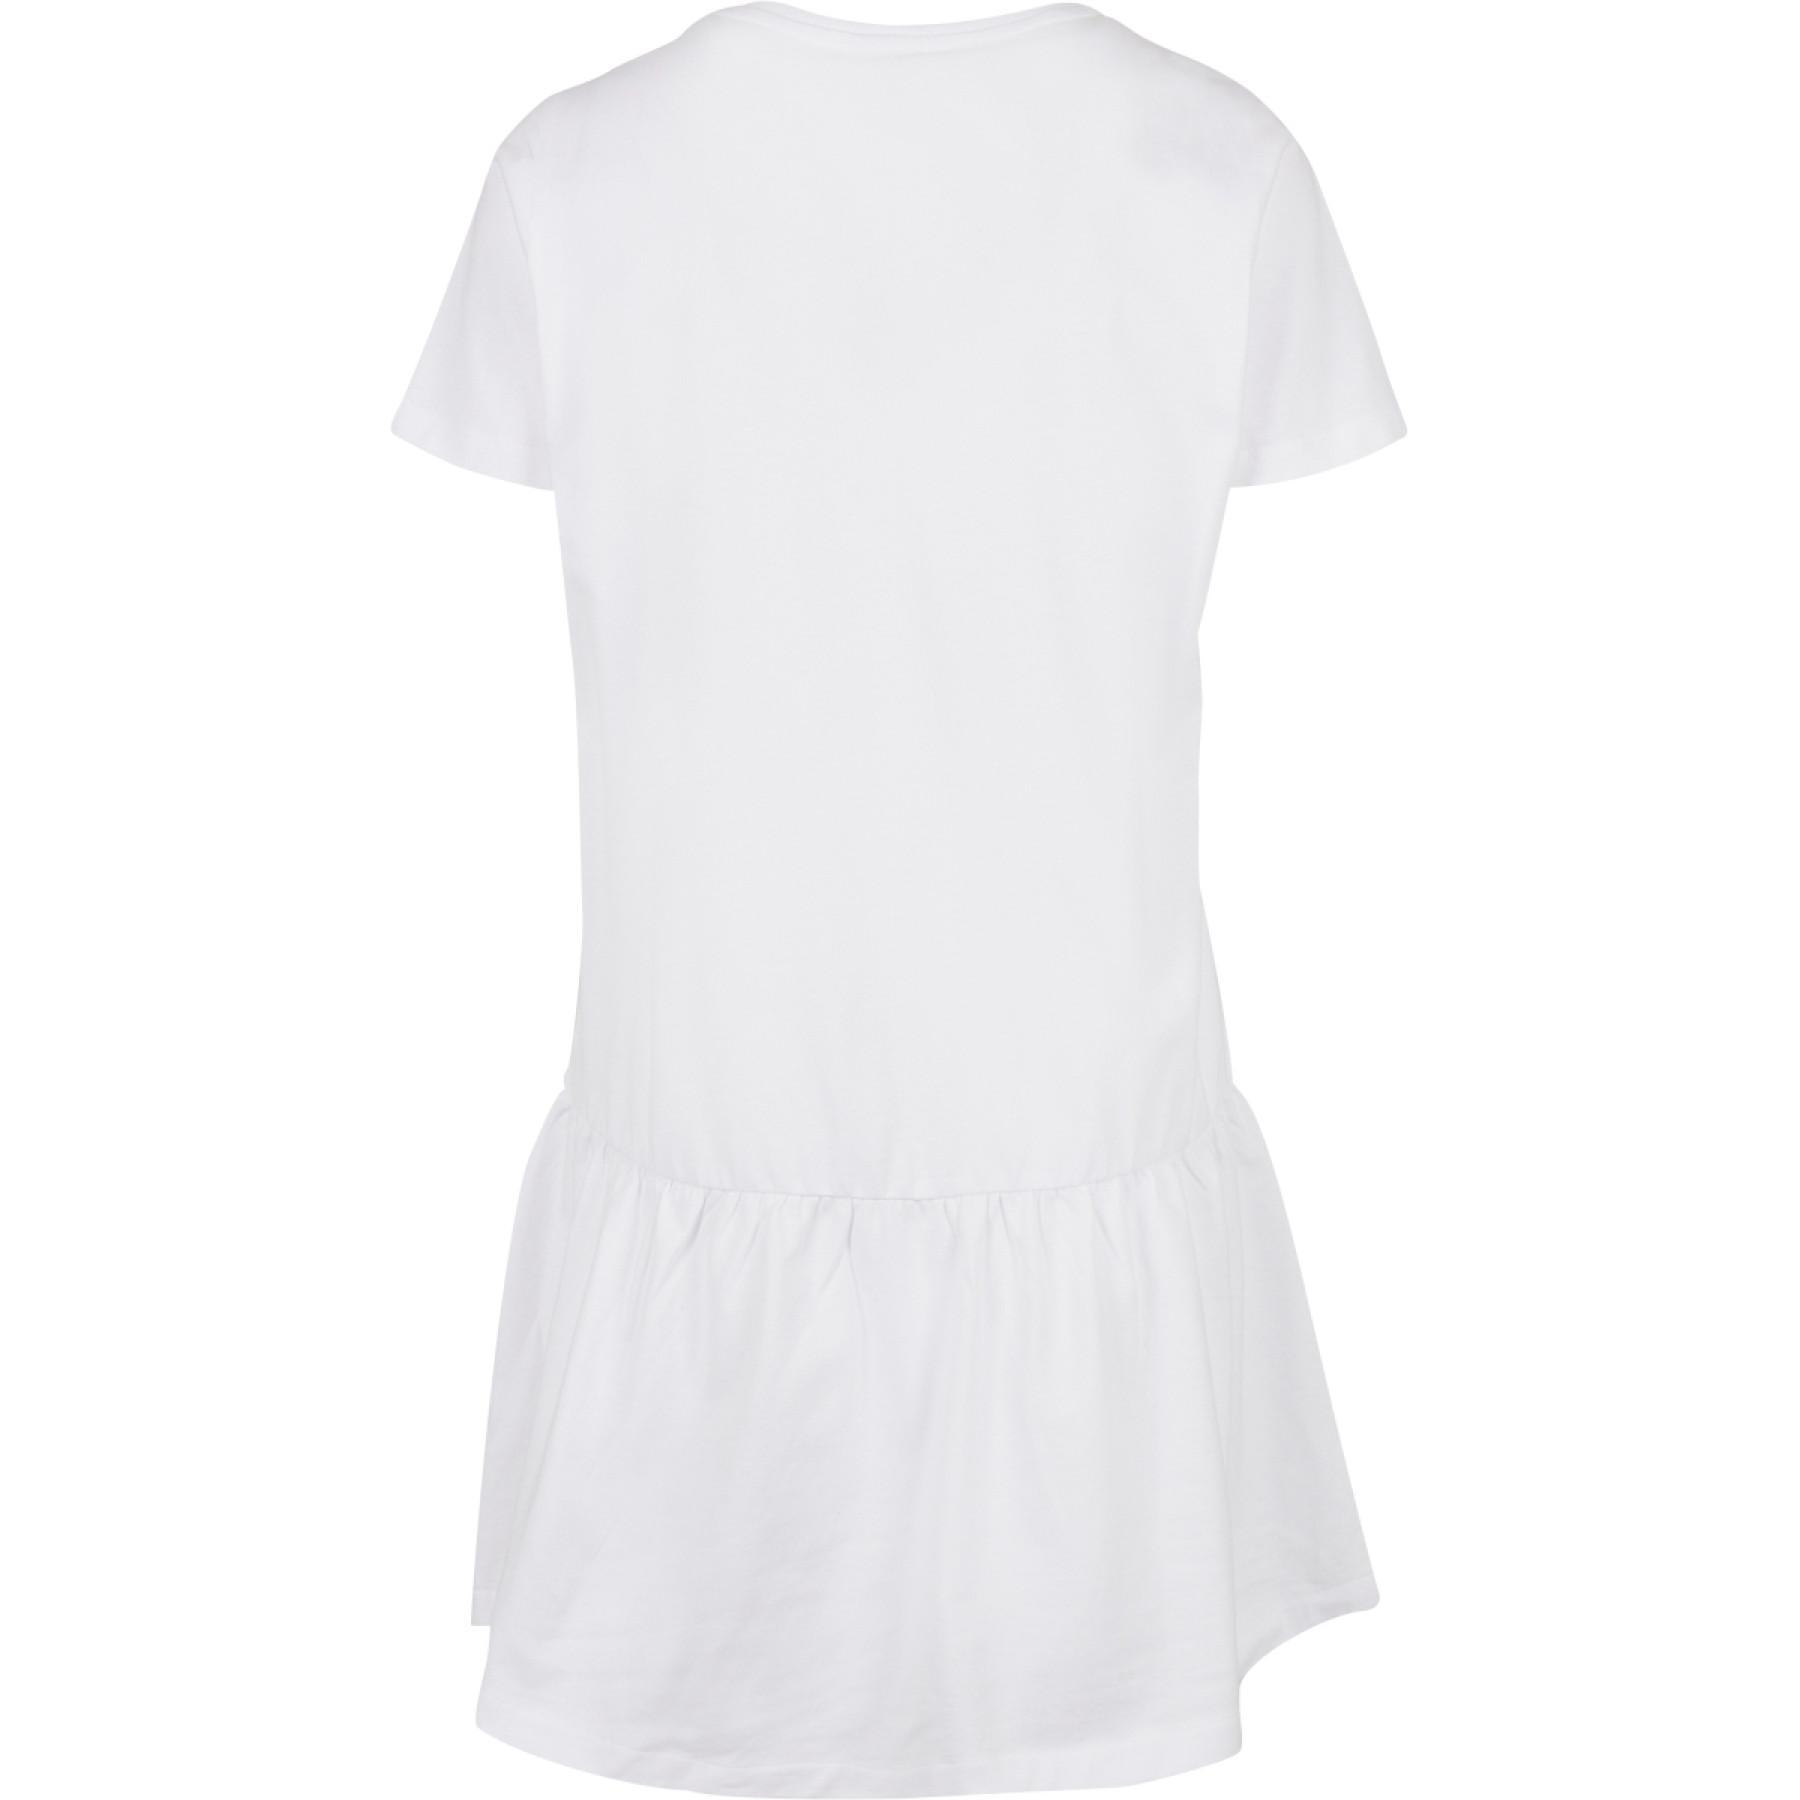 Dames-T-shirt jurk Urban Classics valance-grandes tailles